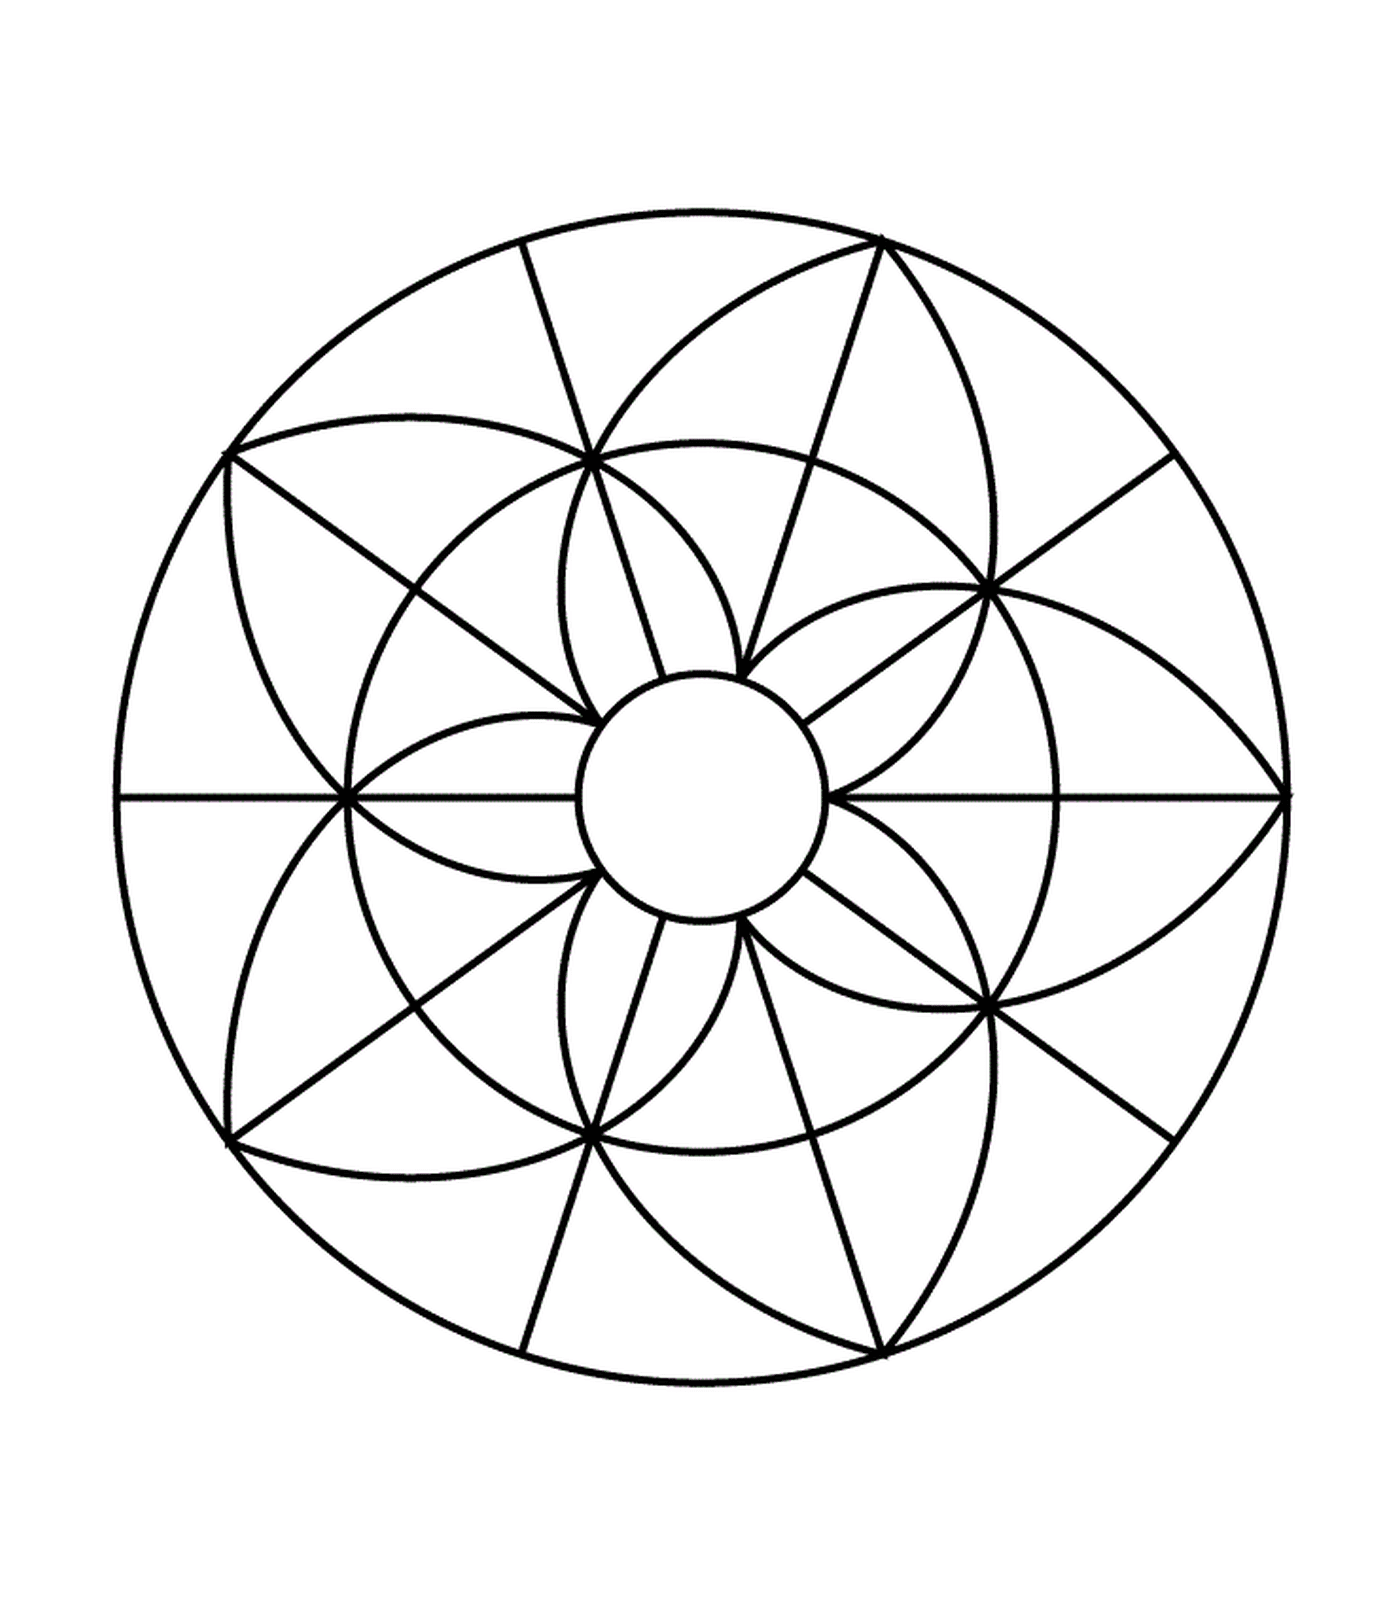  Un cerchio con un motivo floreale 